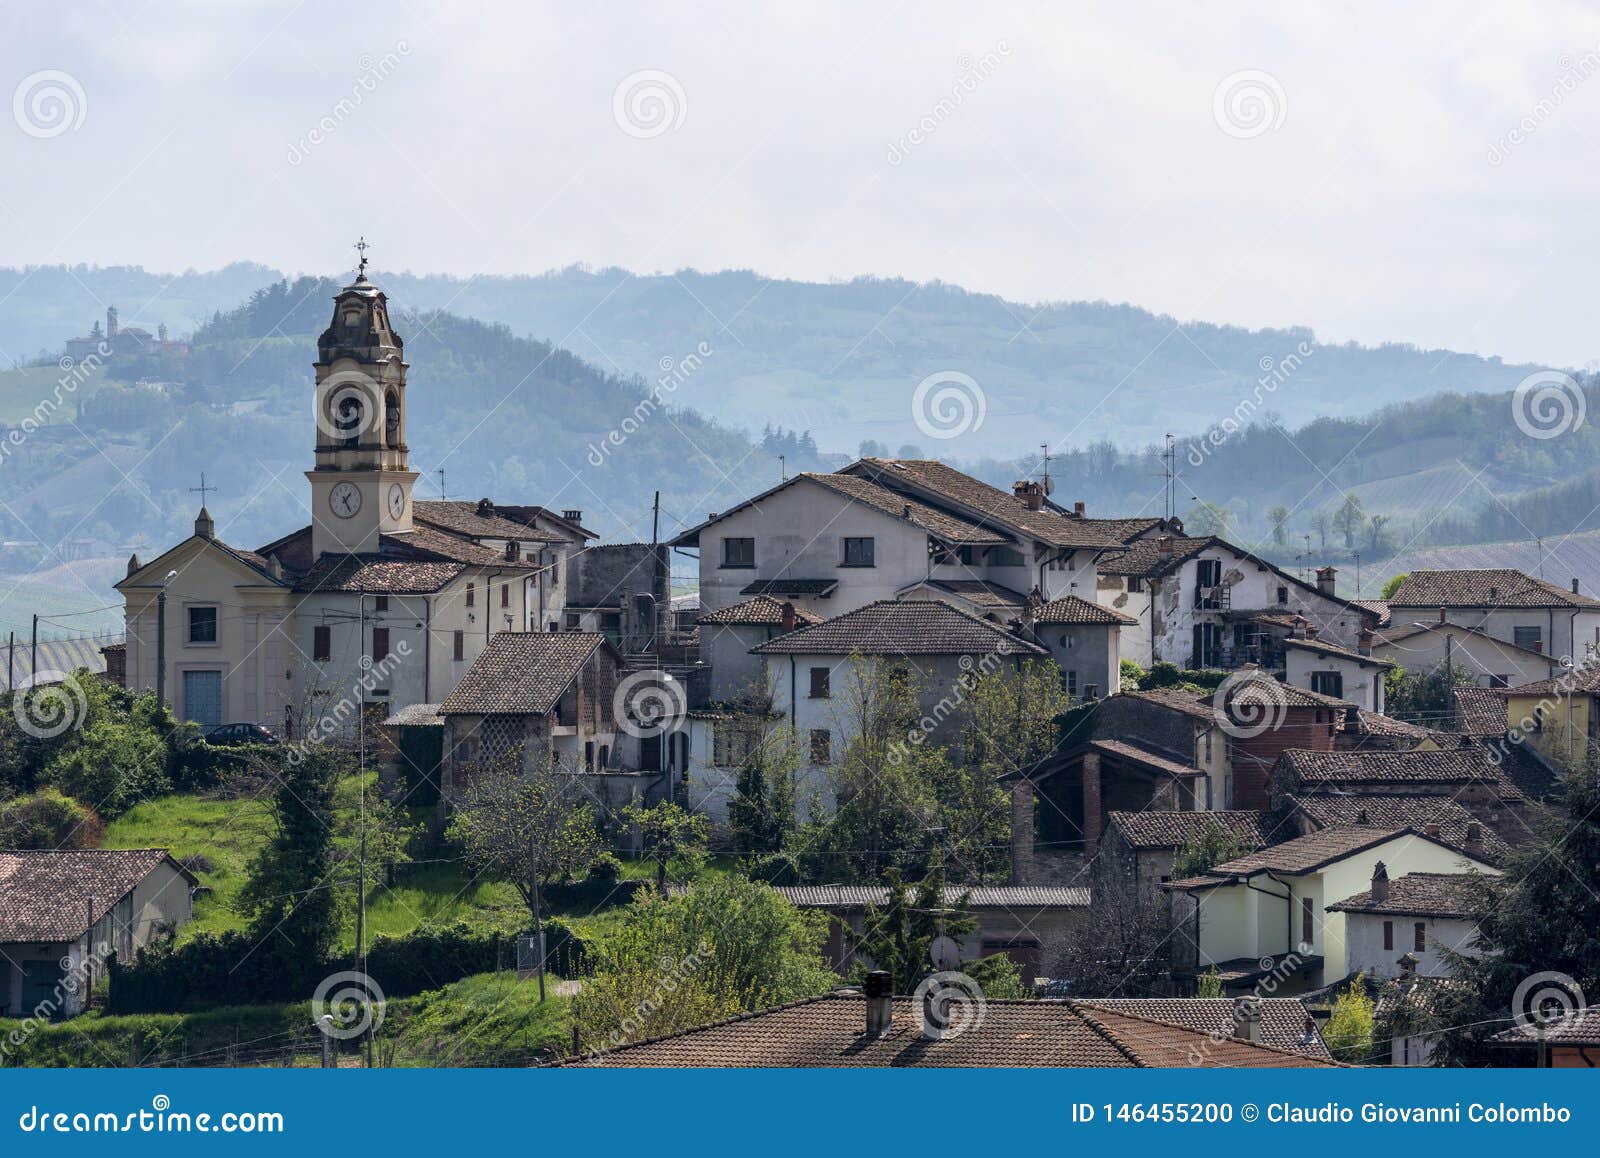 lirio, village in the oltrepo pavese, italy